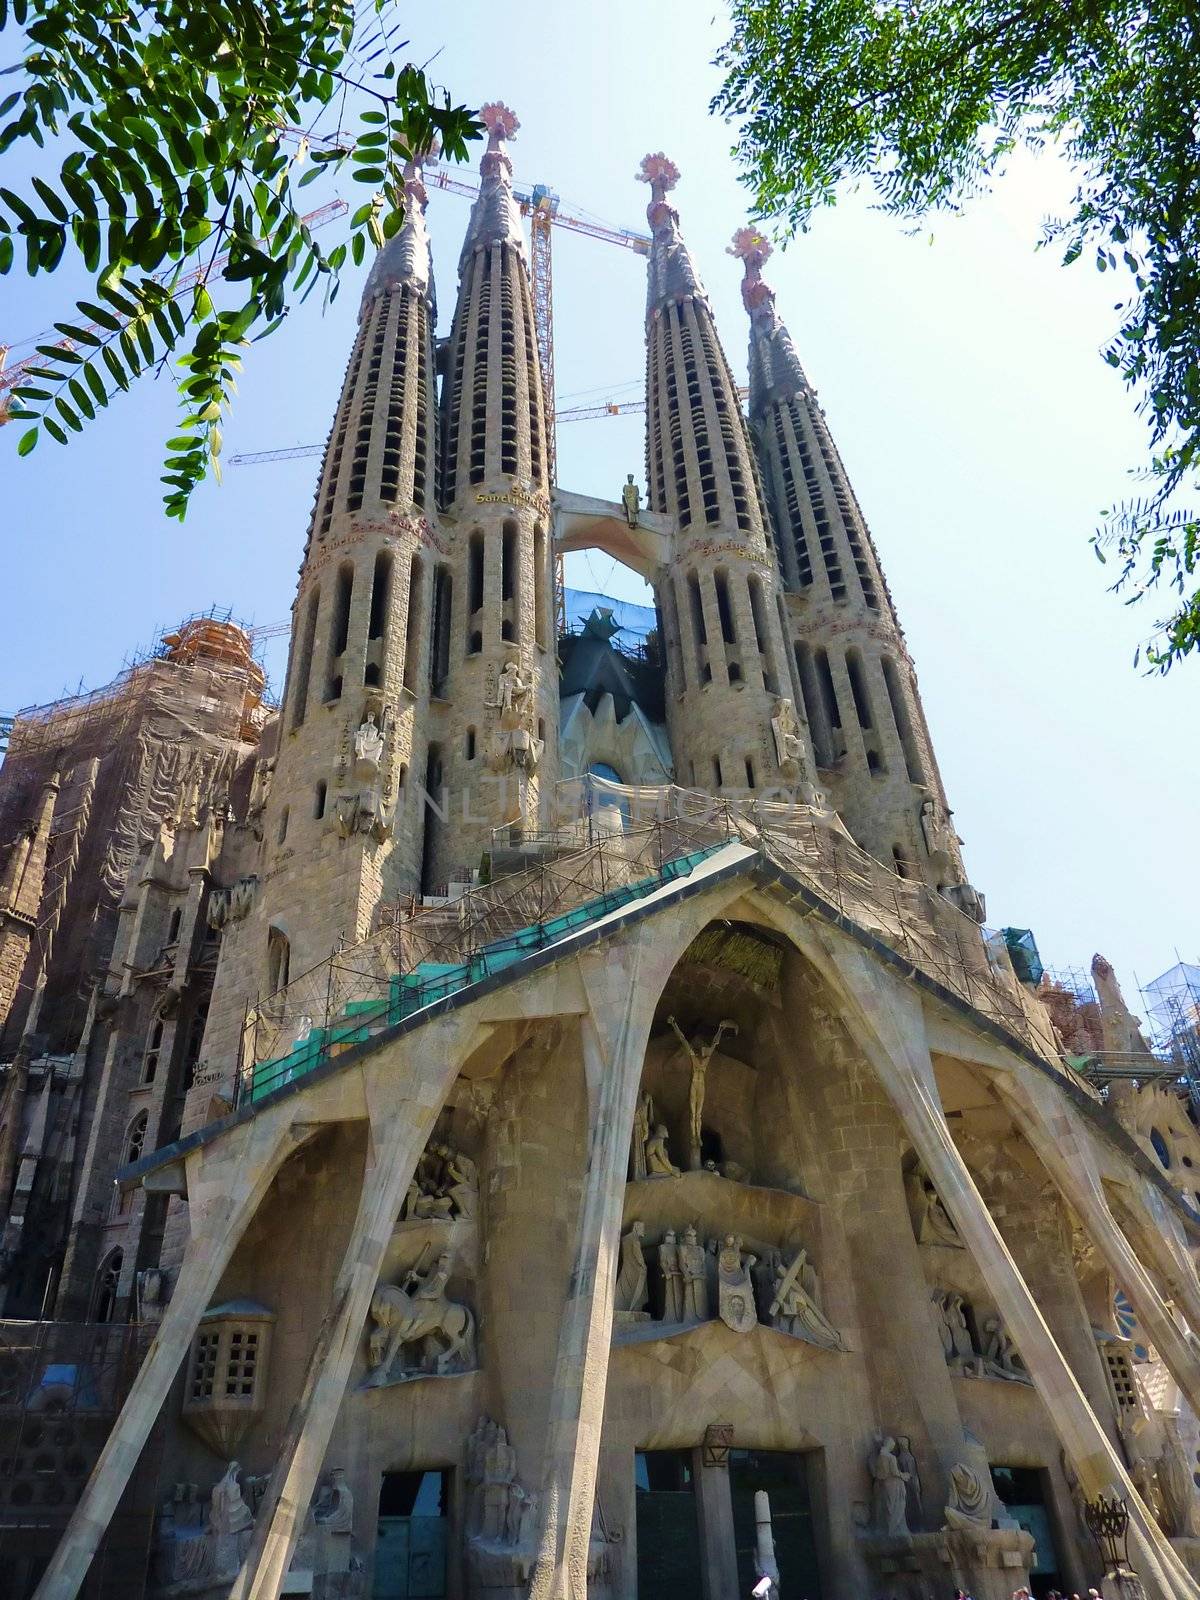 View of the facade of the Sagrada familia church, Barcelona, Spain